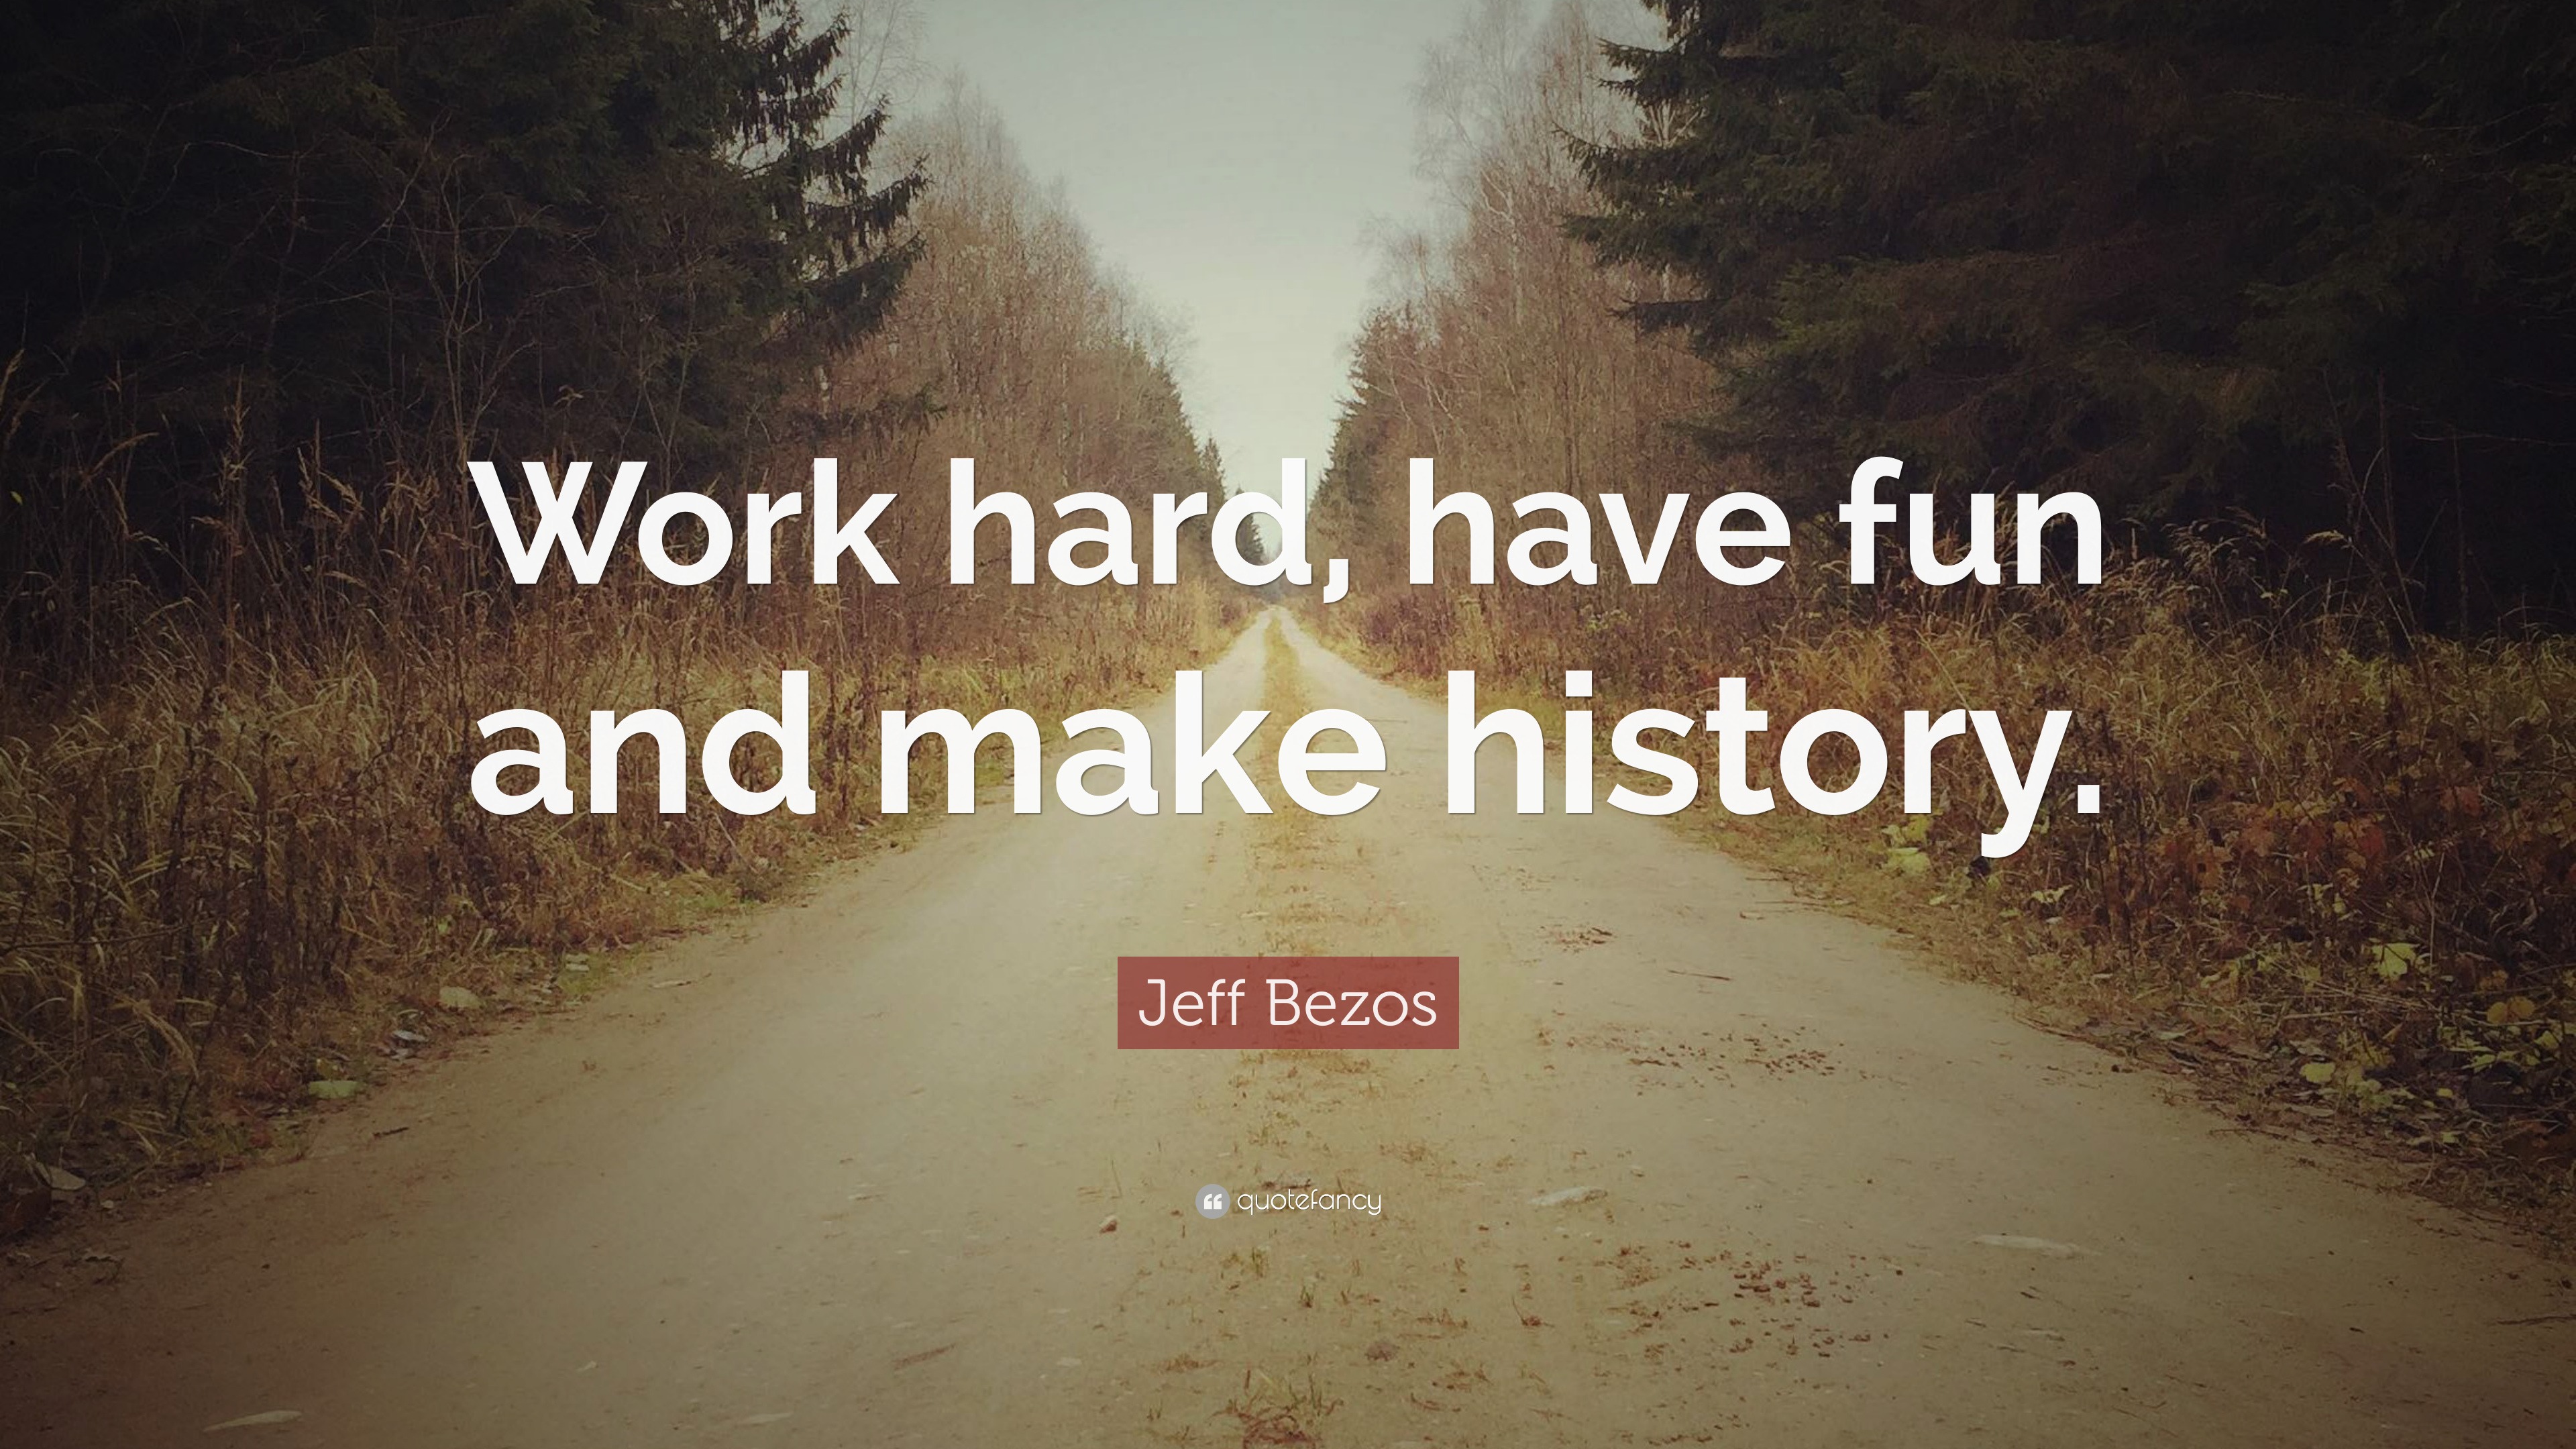 Jeff Bezos Quote: “Work hard, have fun and make history.” (30